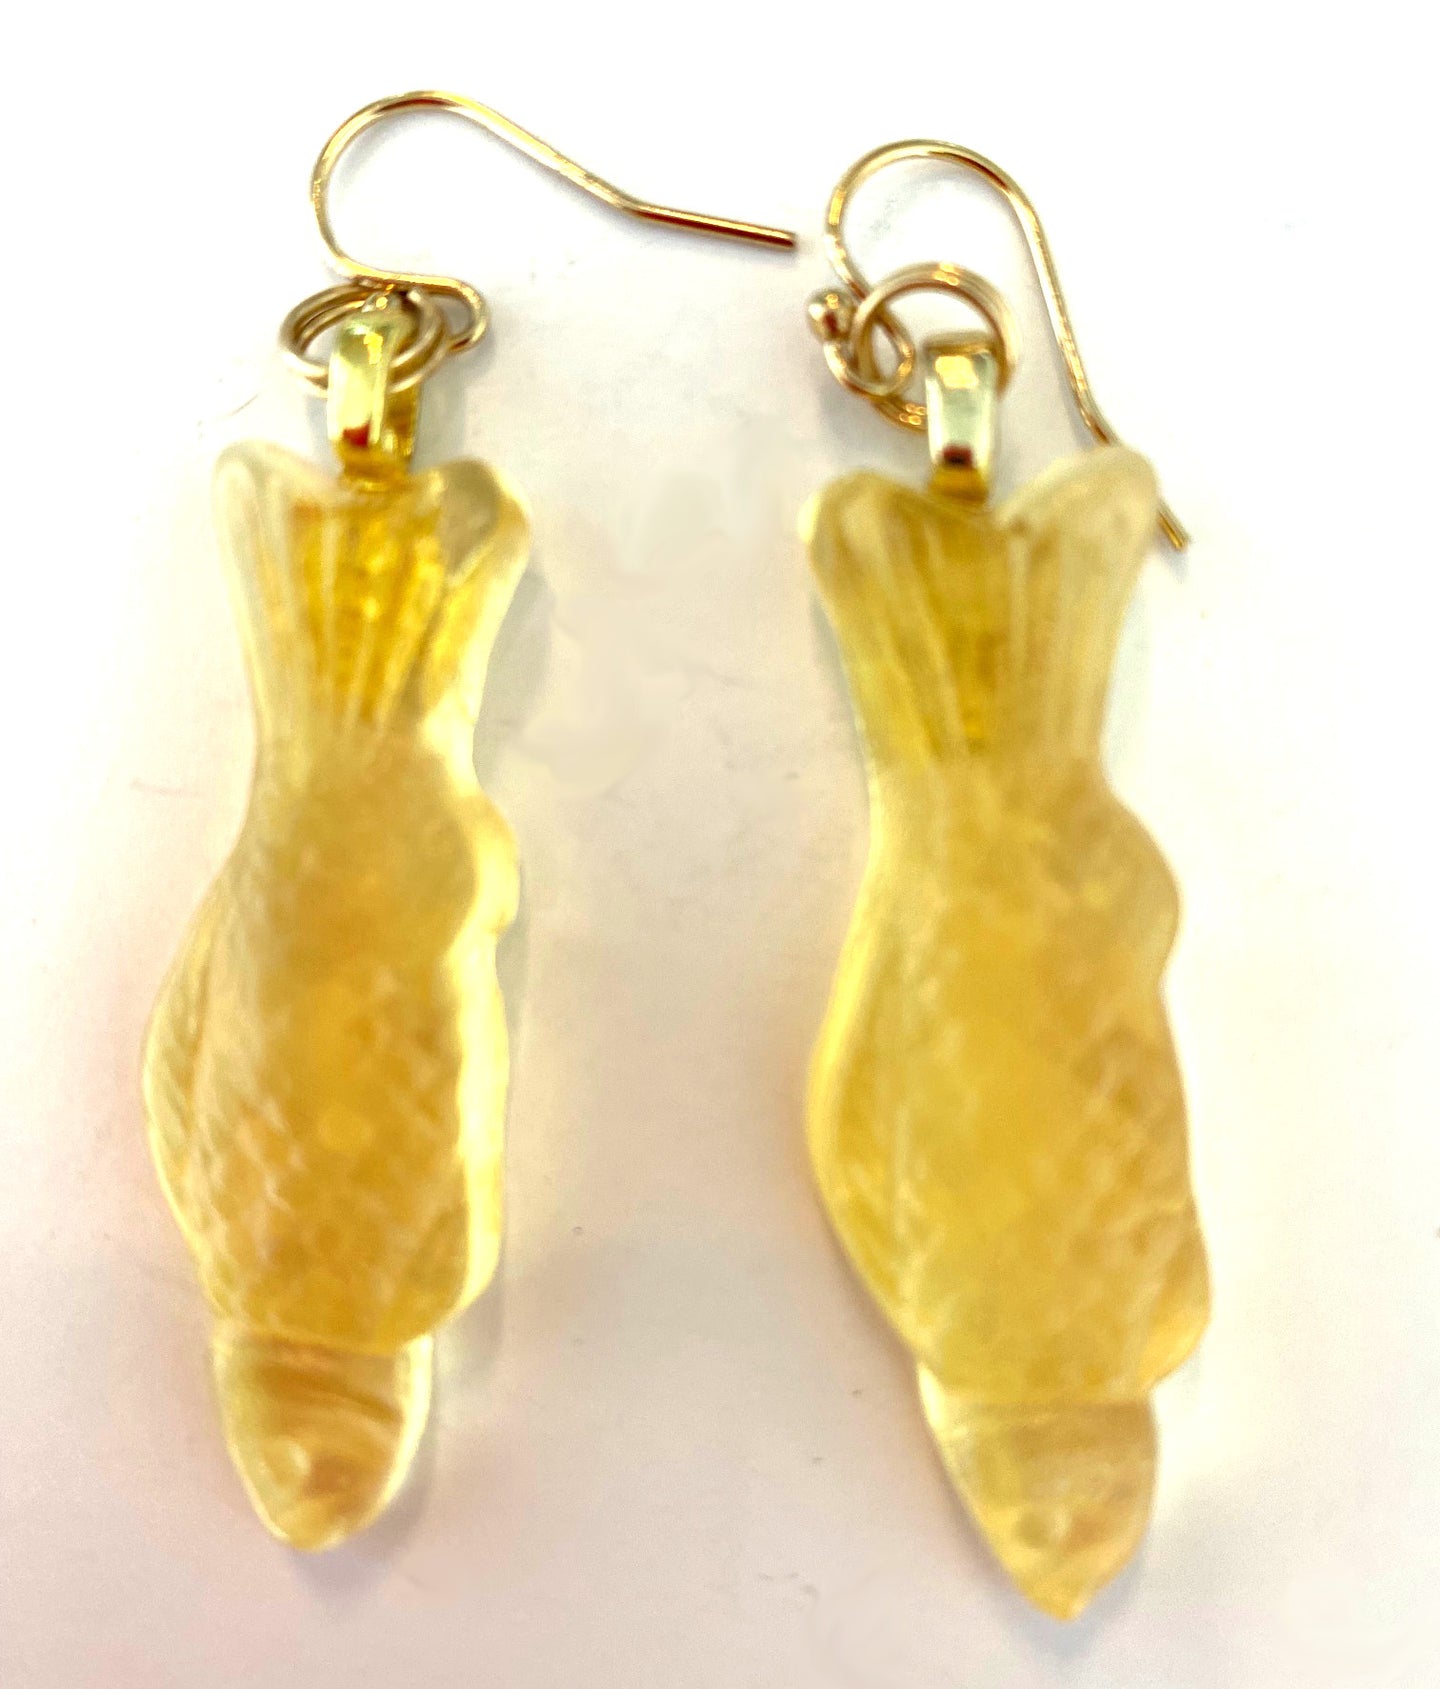 25. Hot Glass Swedish Fish Earring (Pineapple)